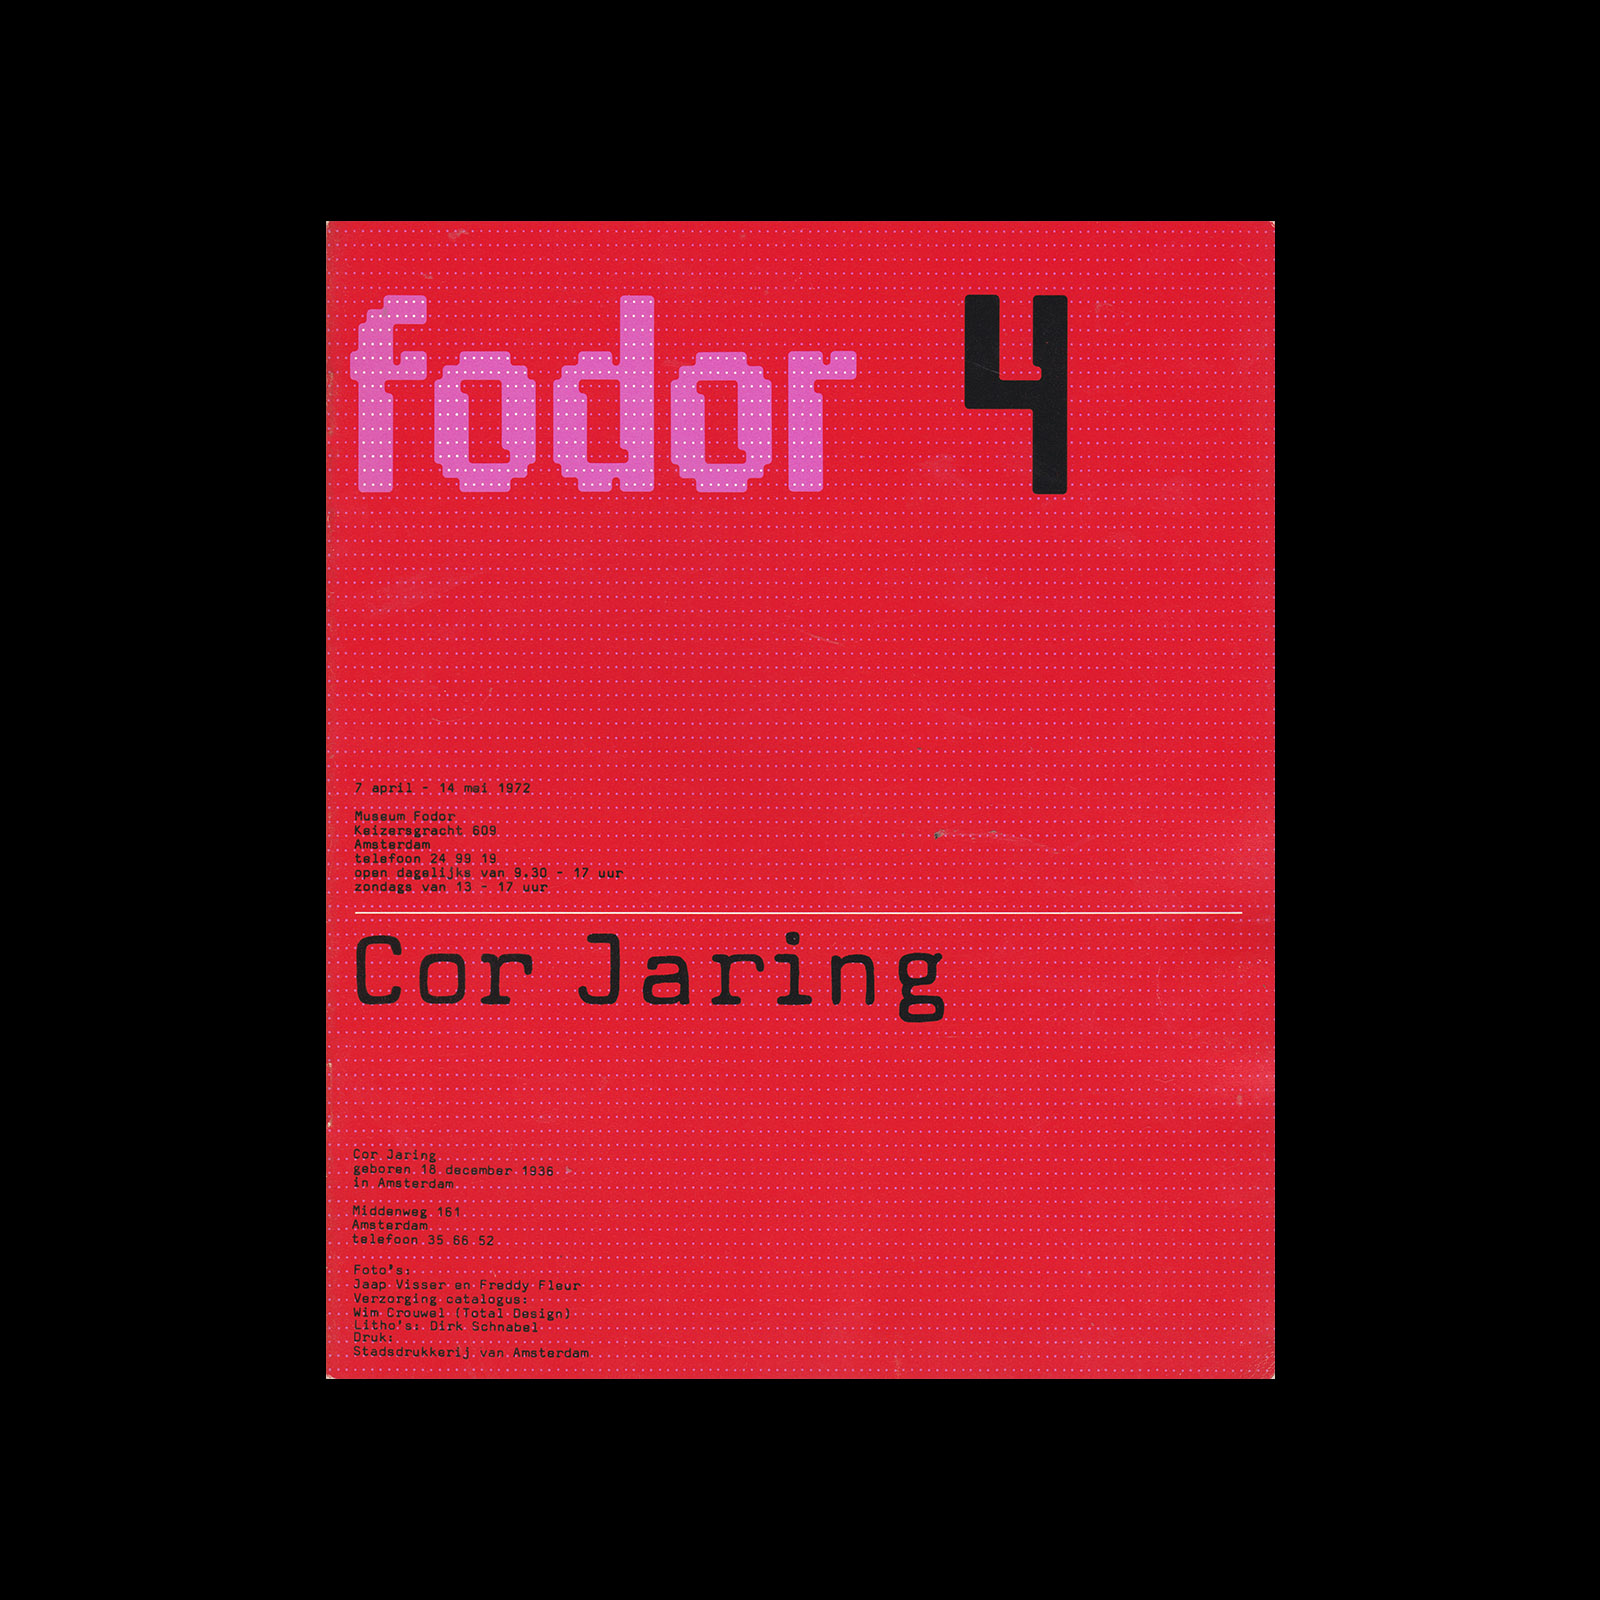 Fodor 4, 1972 - Cor Jaring